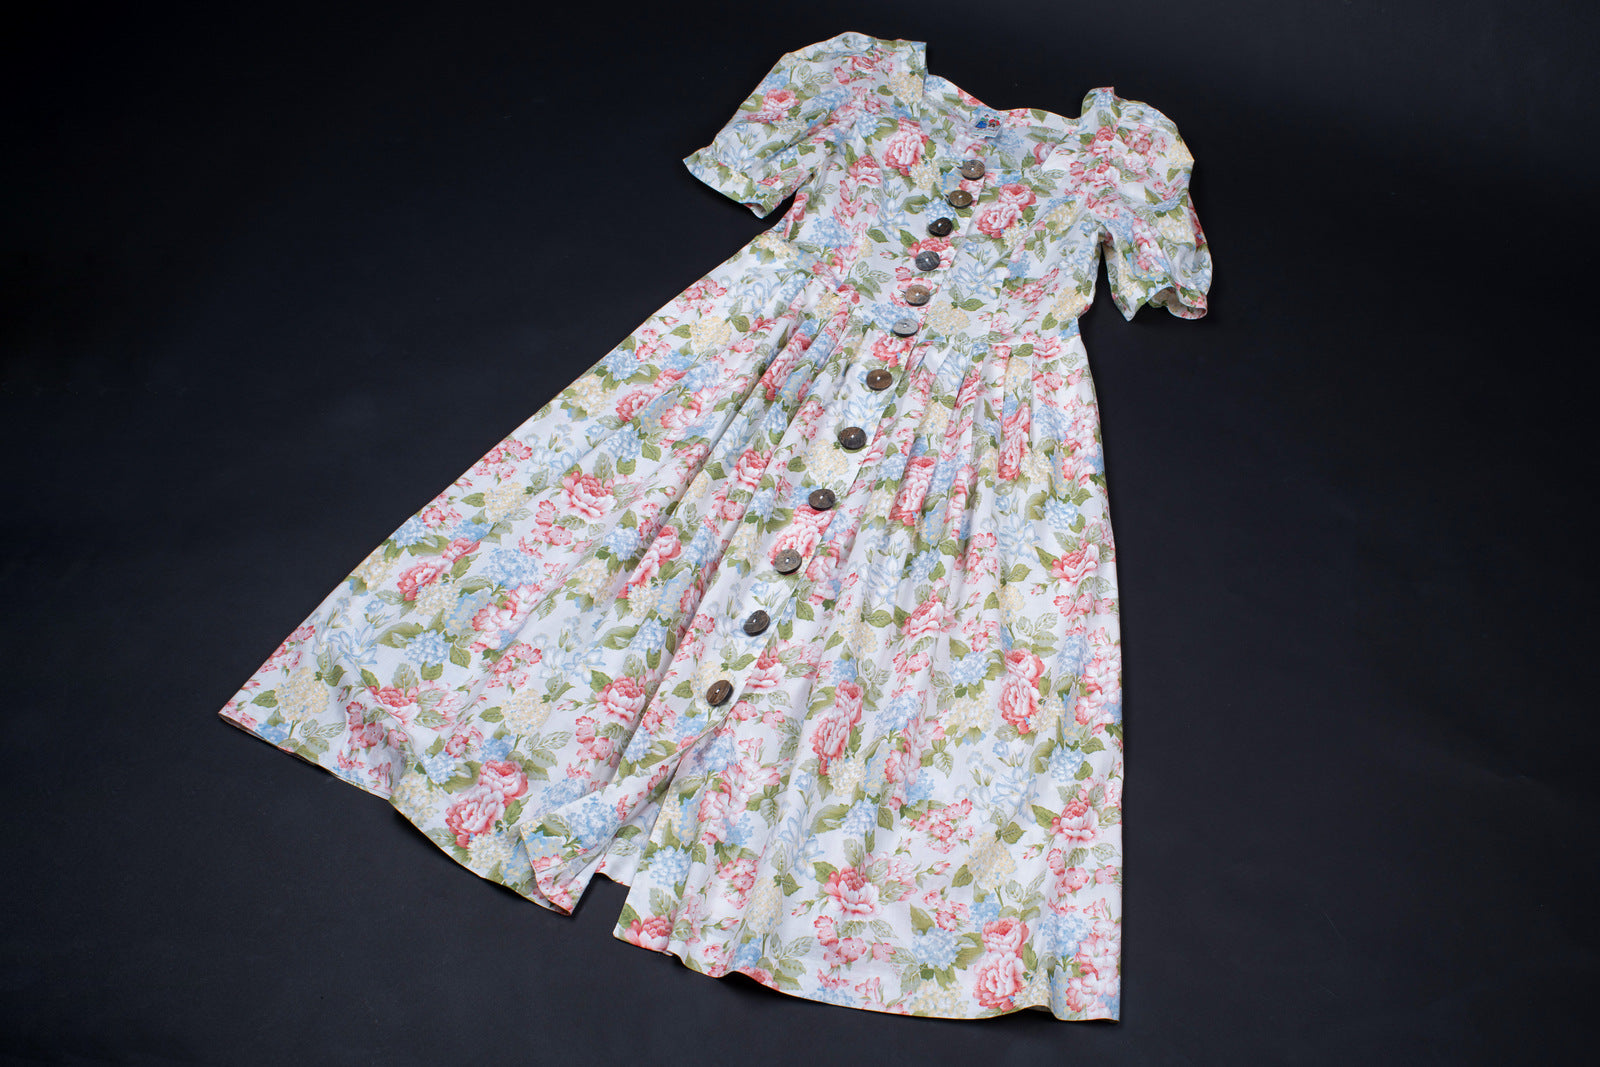 Vintage Austrian Trachten Dirndl Floral Dress, Size L